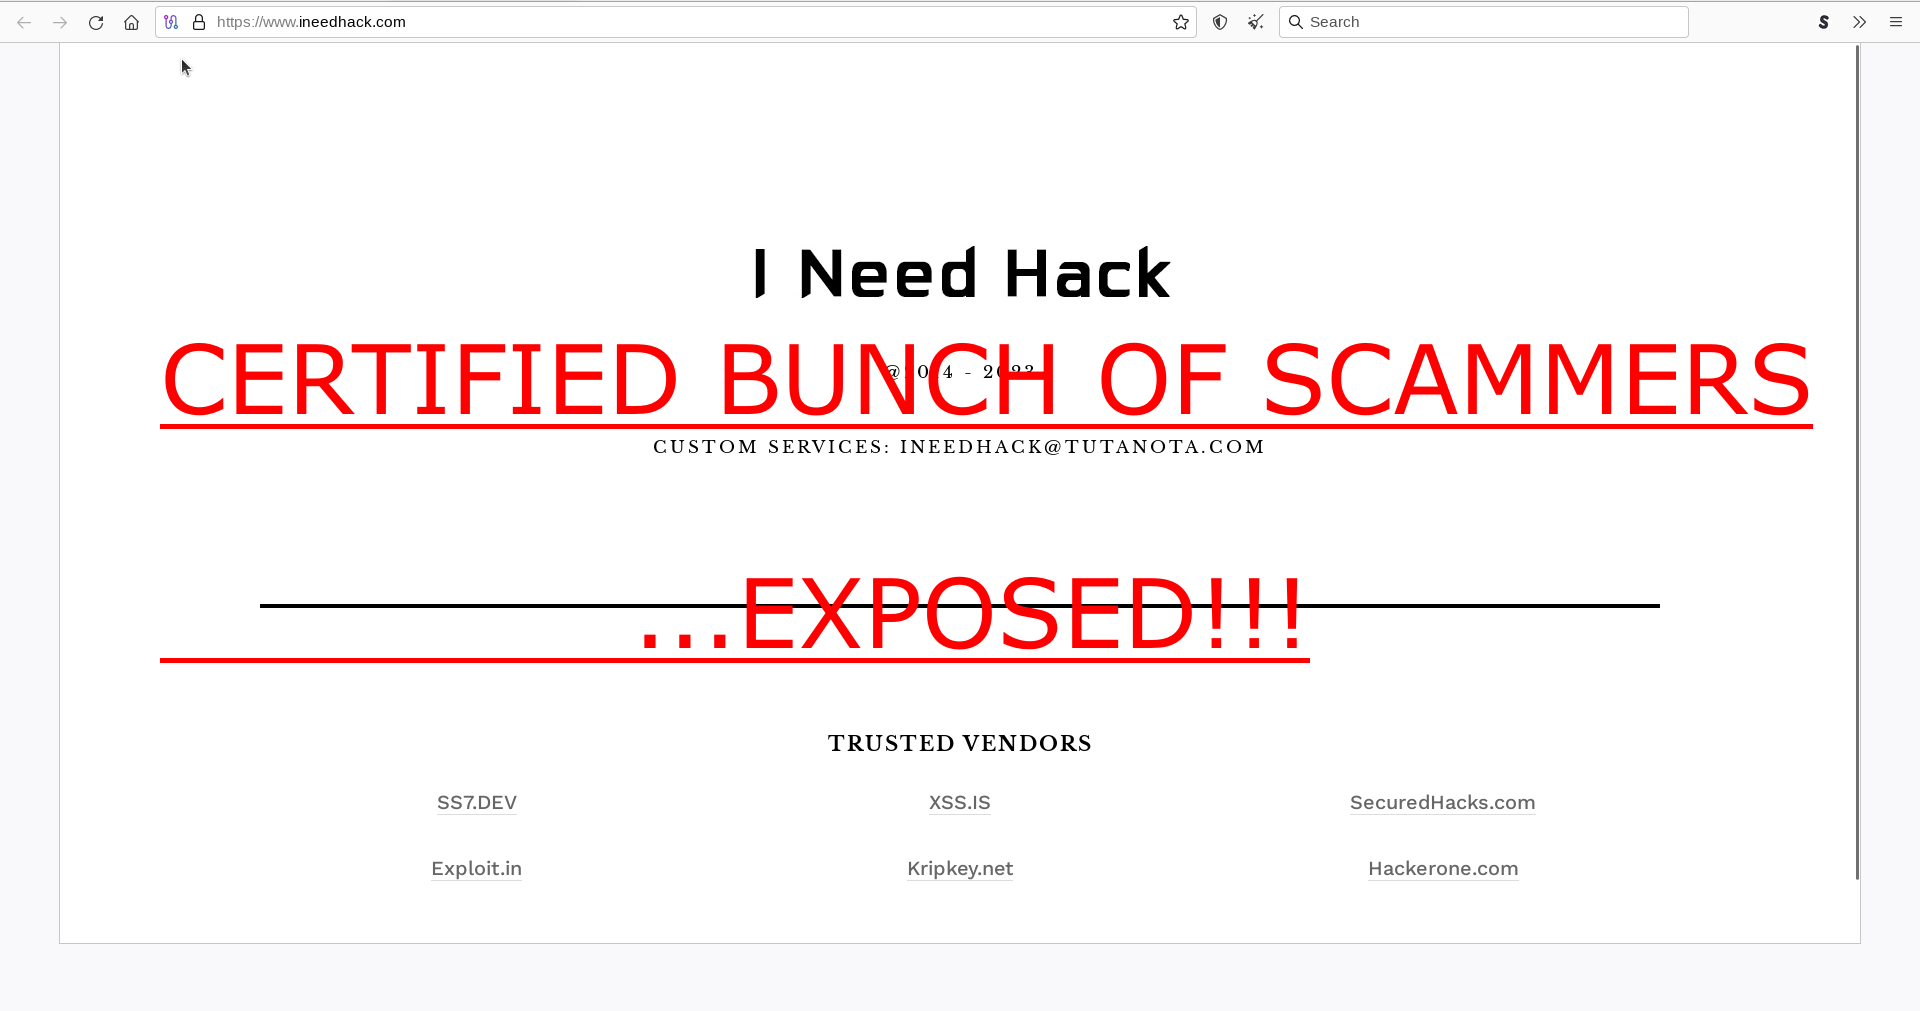 www.ineedhack.com is a certified SCAM